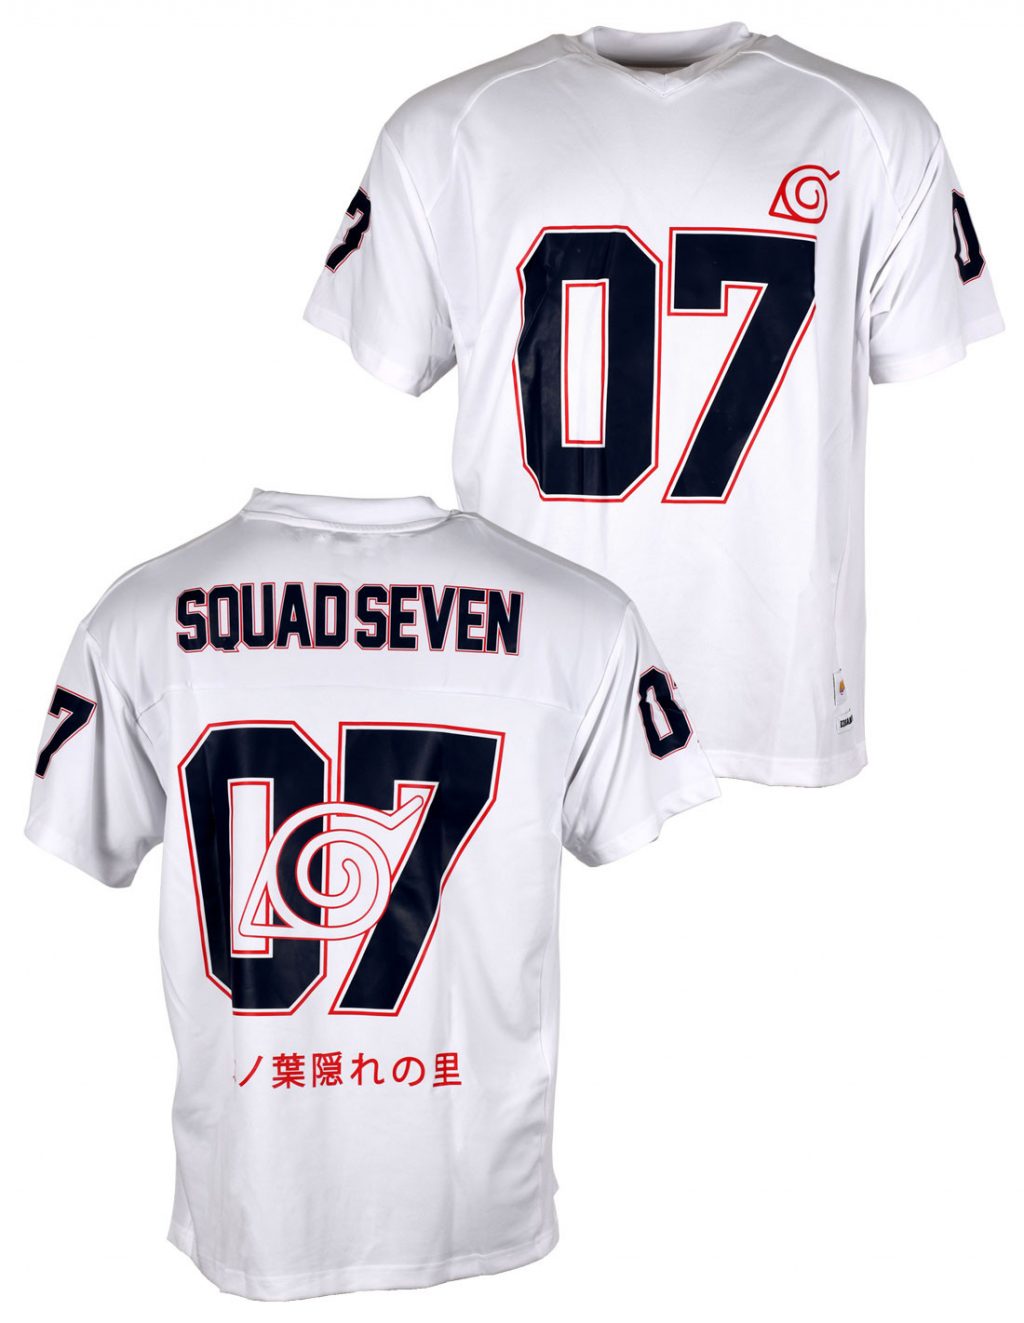 NARUTO - Squad Seven - T-Shirt Sports US Replica unisex (M)